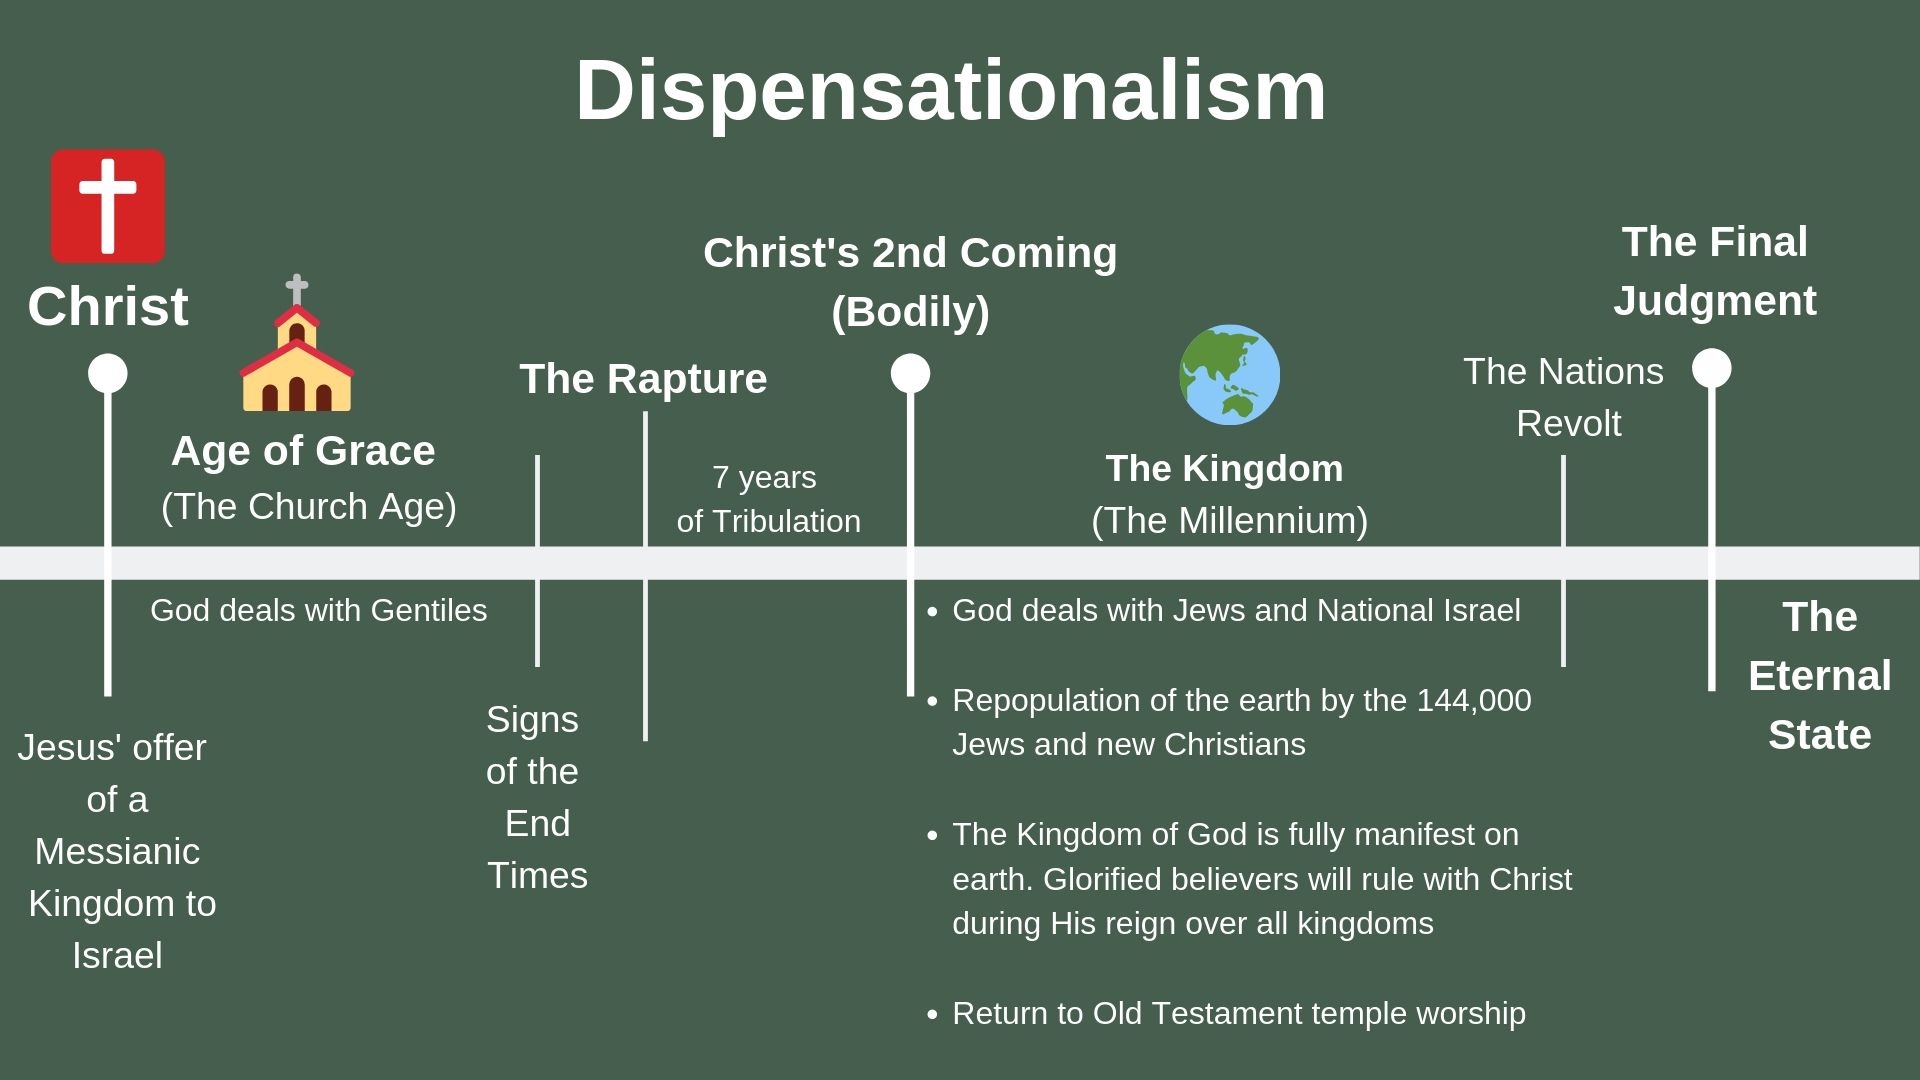 The Millennium | Revelation 20:1-10 — Church of the Advent